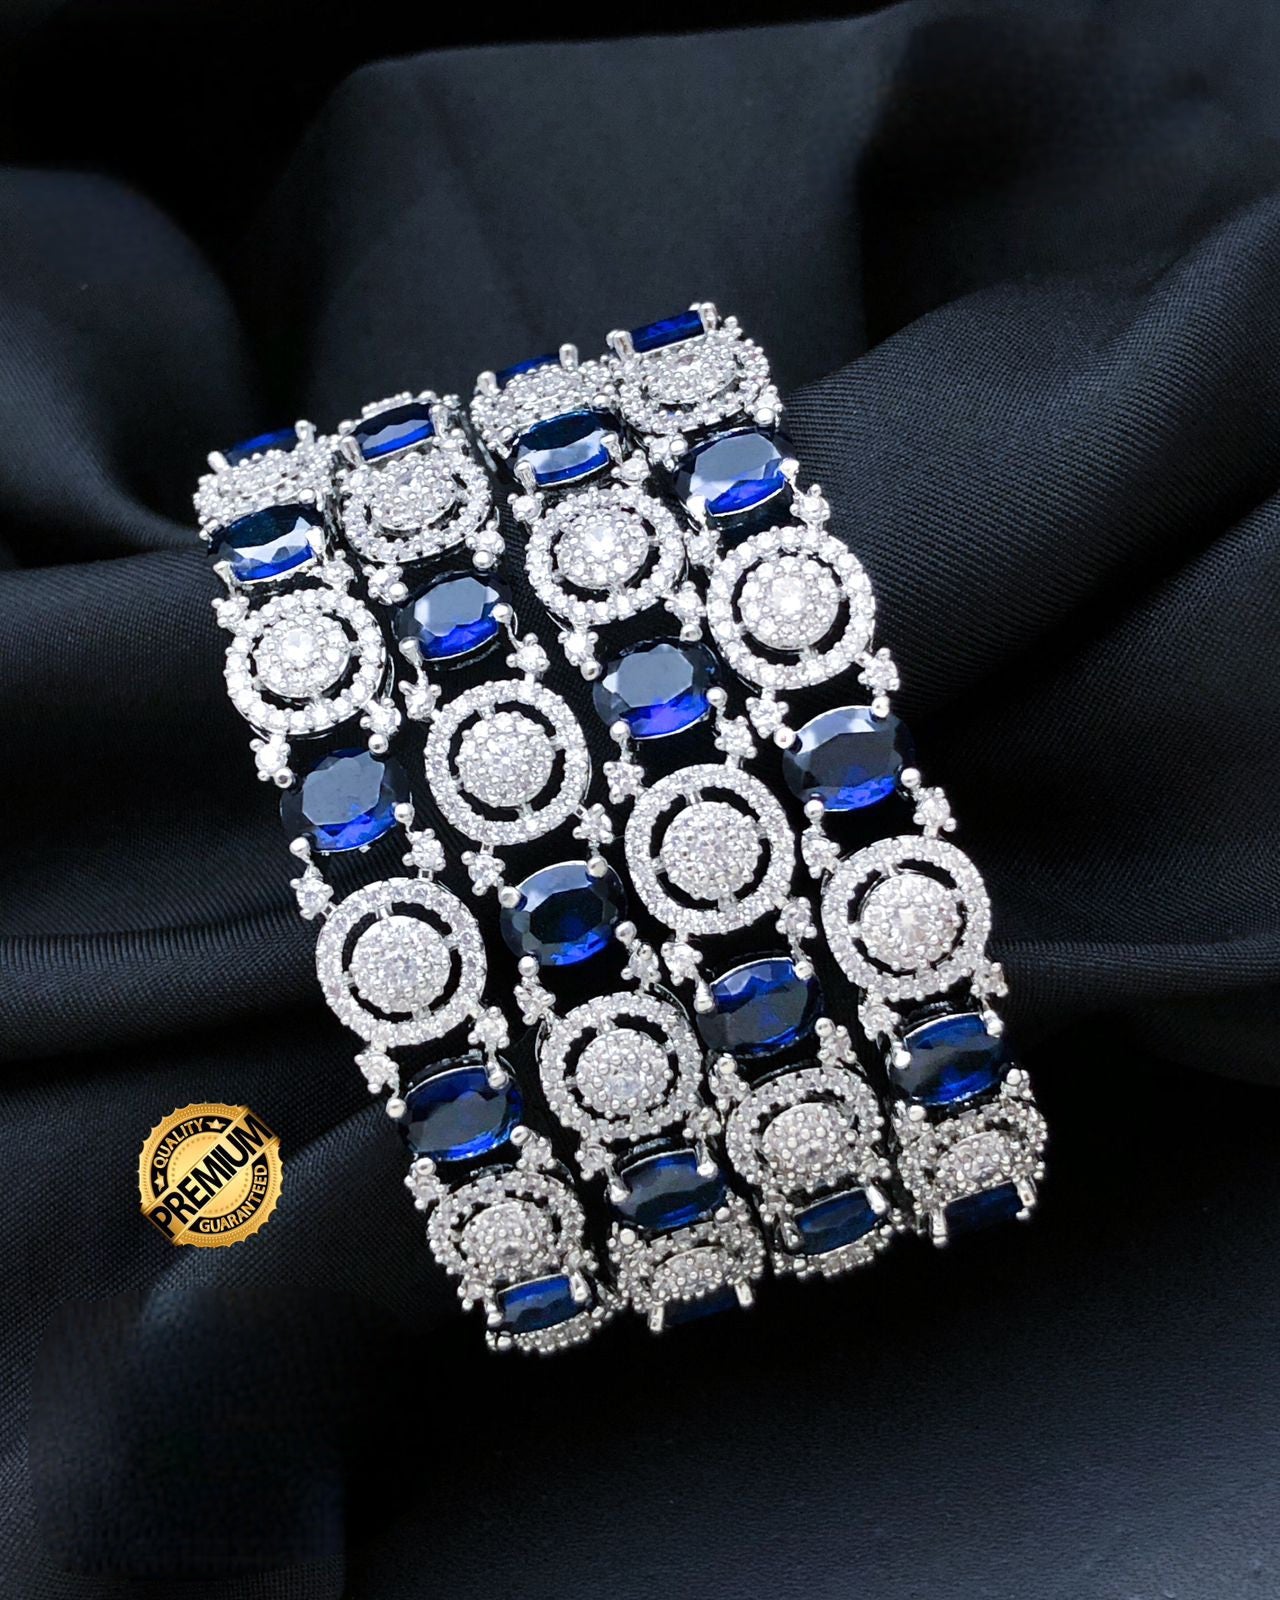 Silver Plating Rhodium tone Blue Sapphire CZ and White Crystal Bangle bracelet |American diamond Oval shape Blue stone bangles pair 4 Pcs